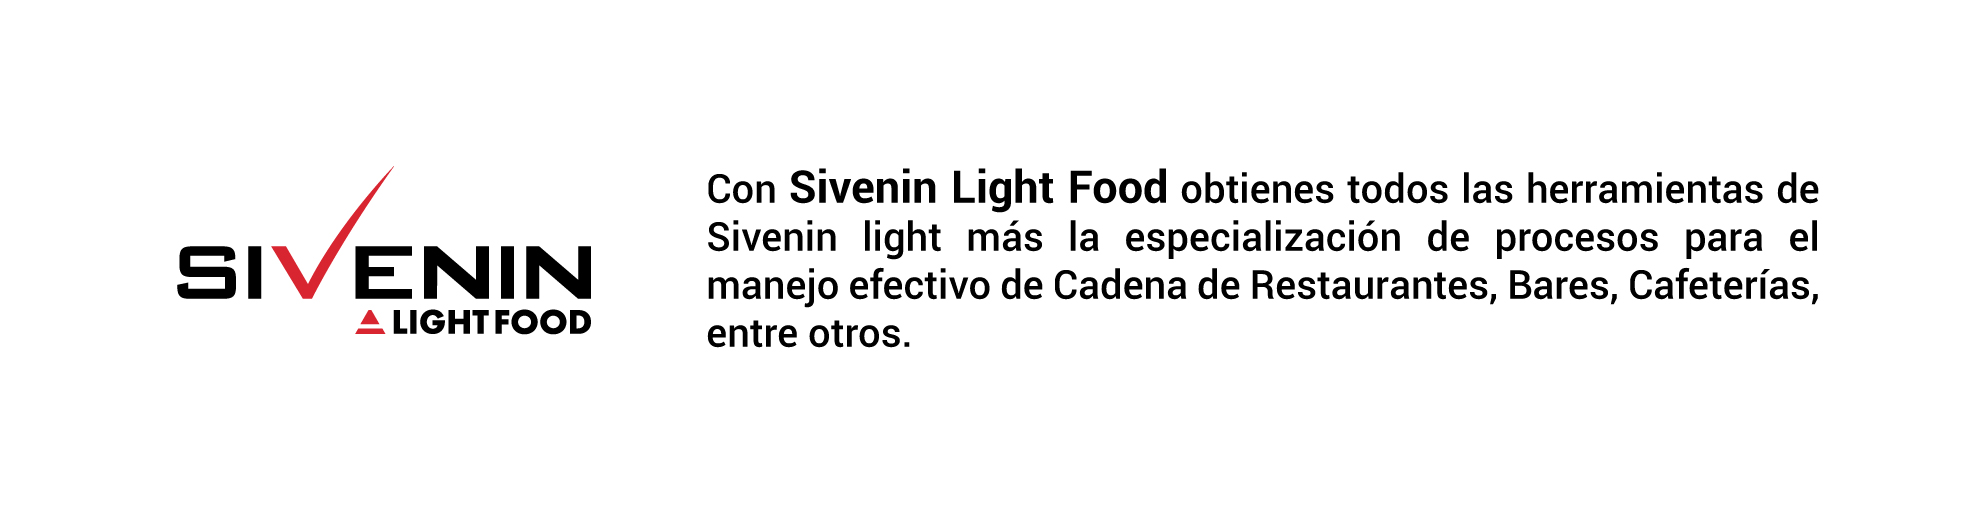 Sivenin-Light-food